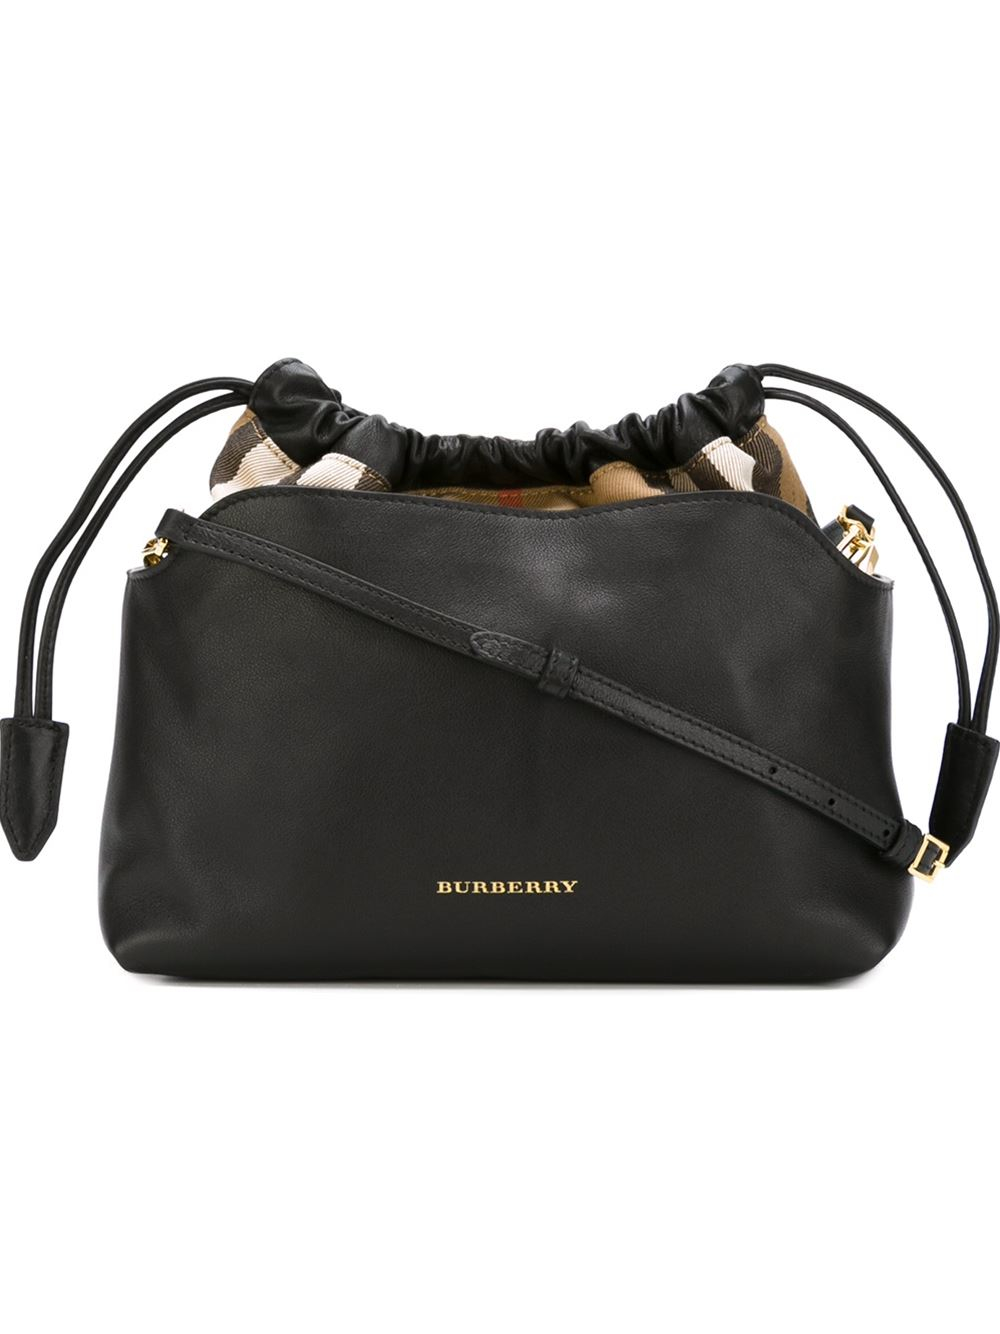 Burberry Drawstring Crossbody Bag in Black | Lyst